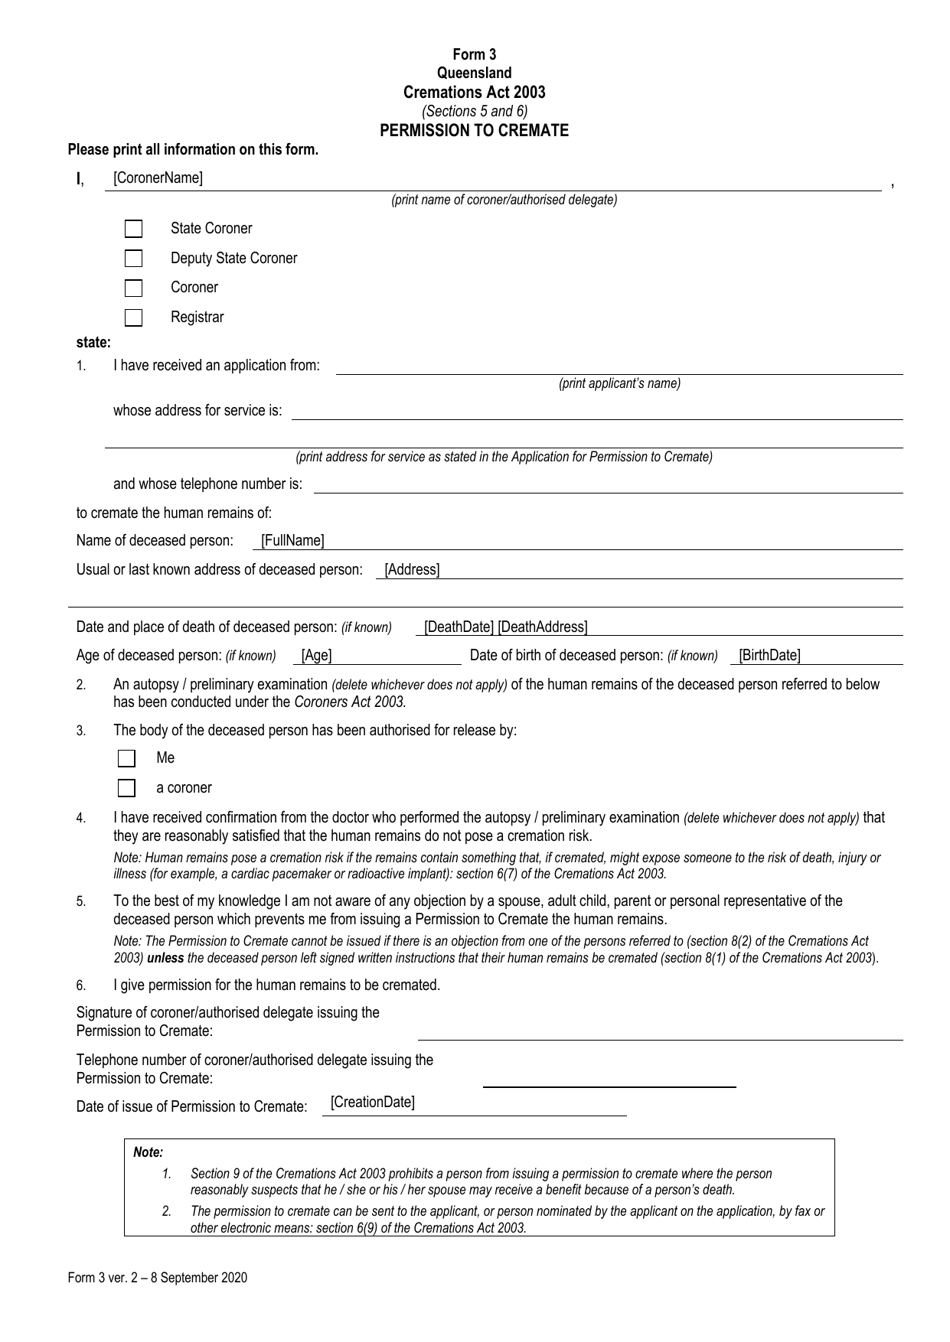 Form 3 Permission to Cremate - Queensland, Australia, Page 1